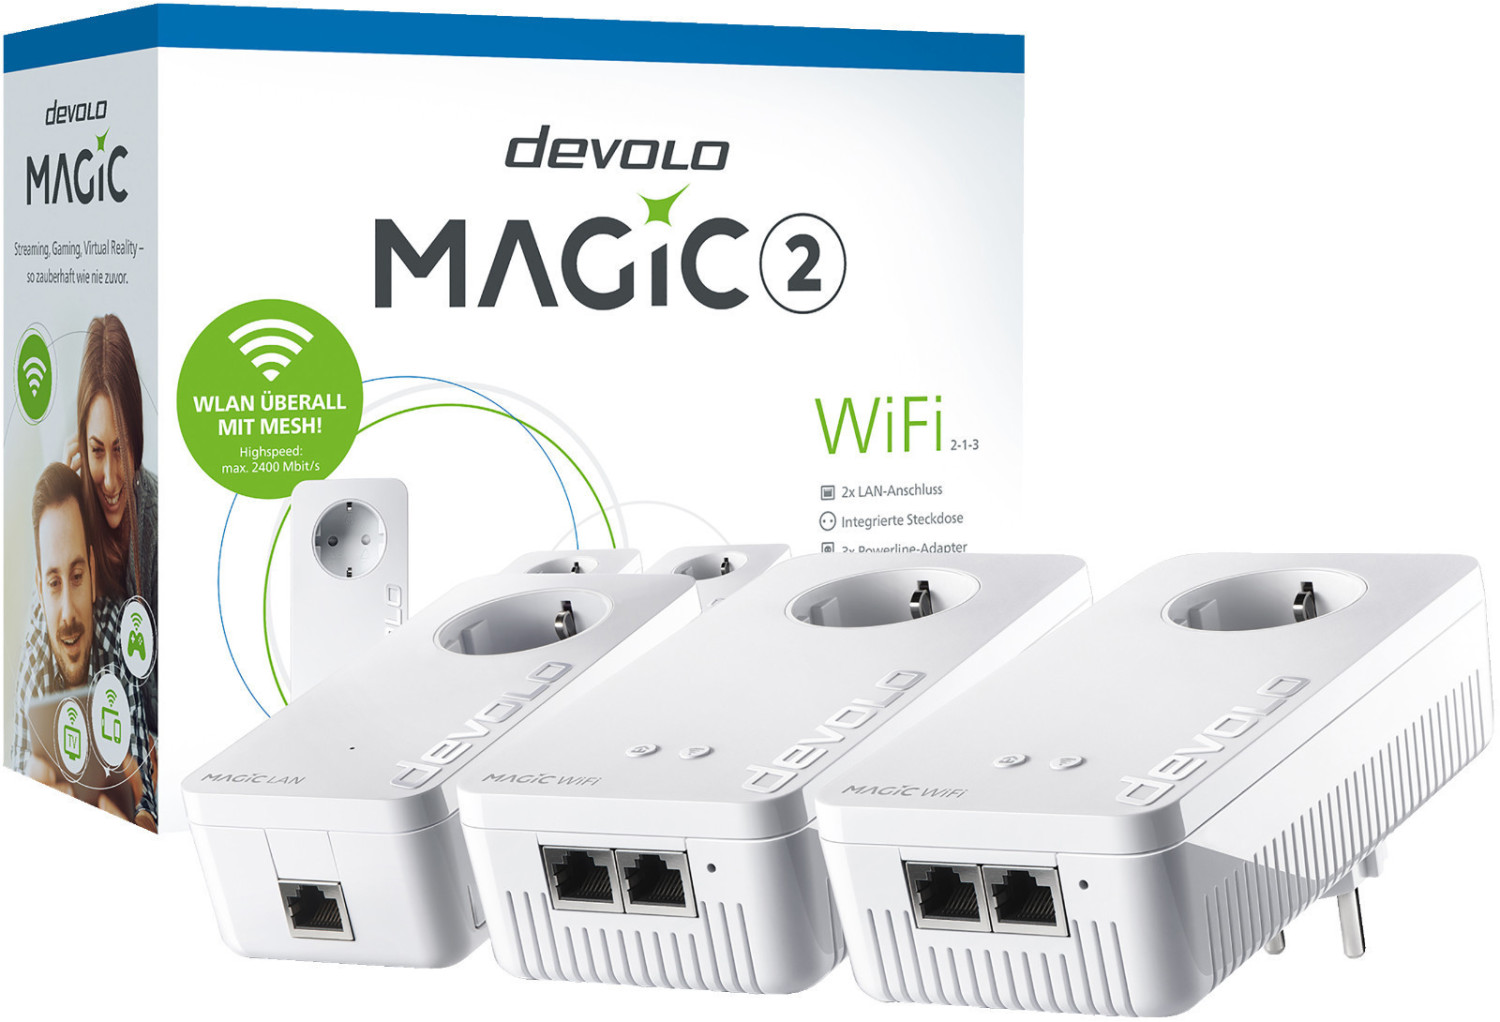 devolo Magic 2 WiFi Multiroom Kit (8391)